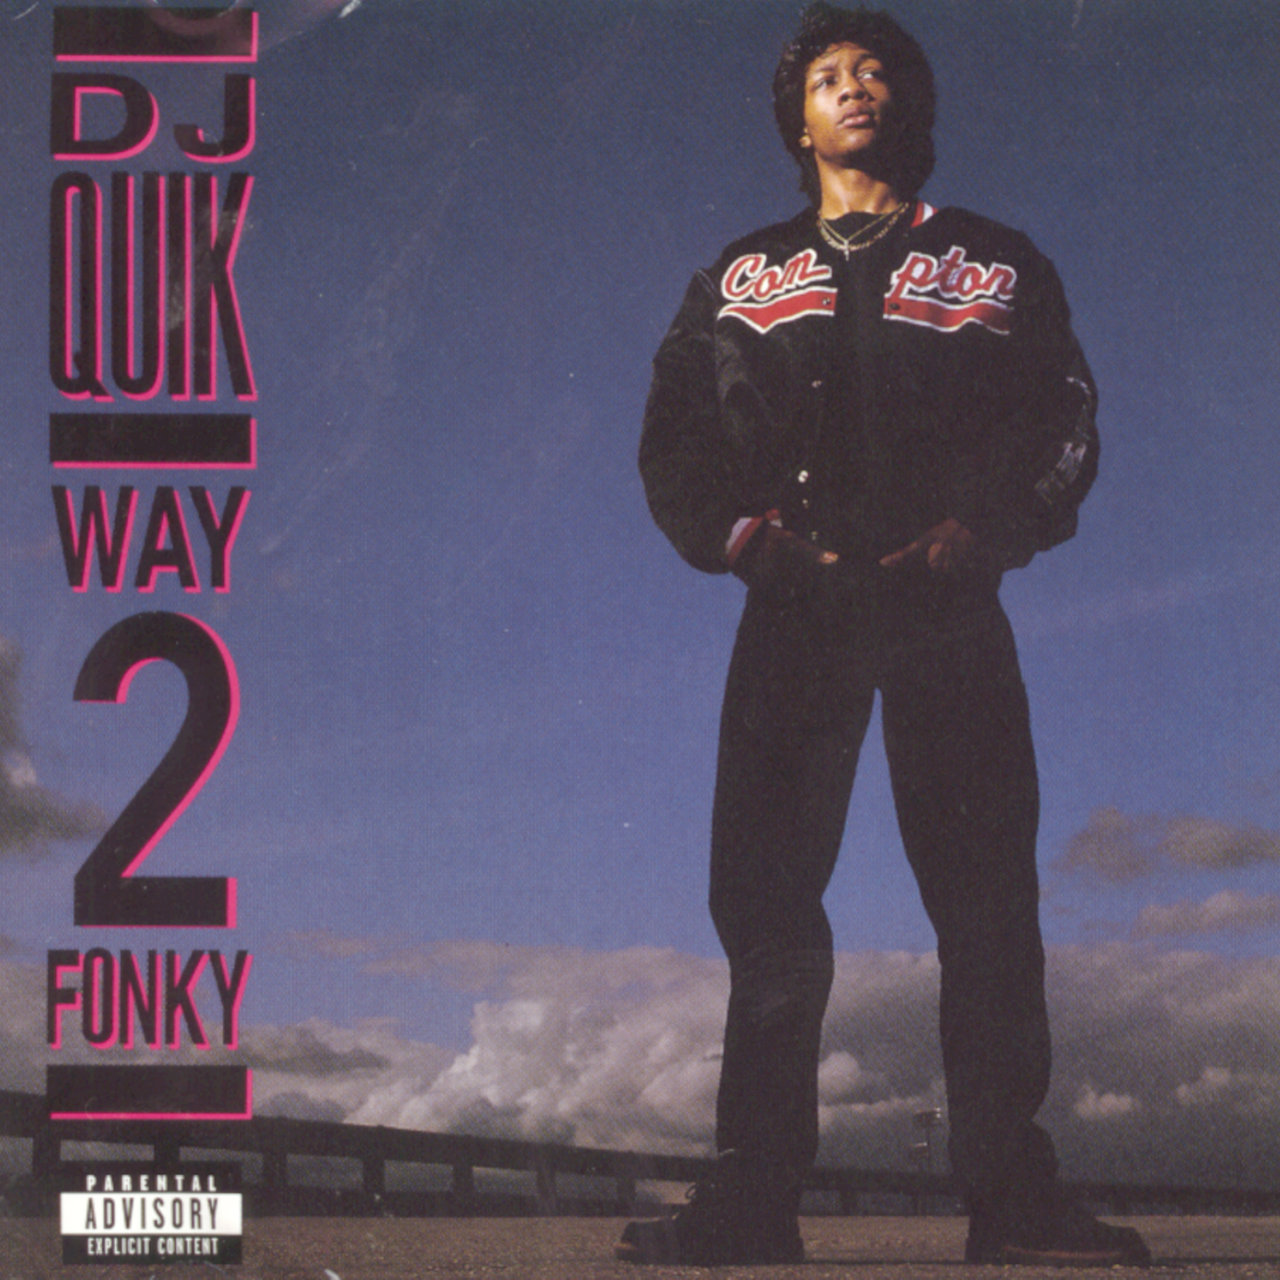 DJ Quik - Way 2 Fonky (Cover)